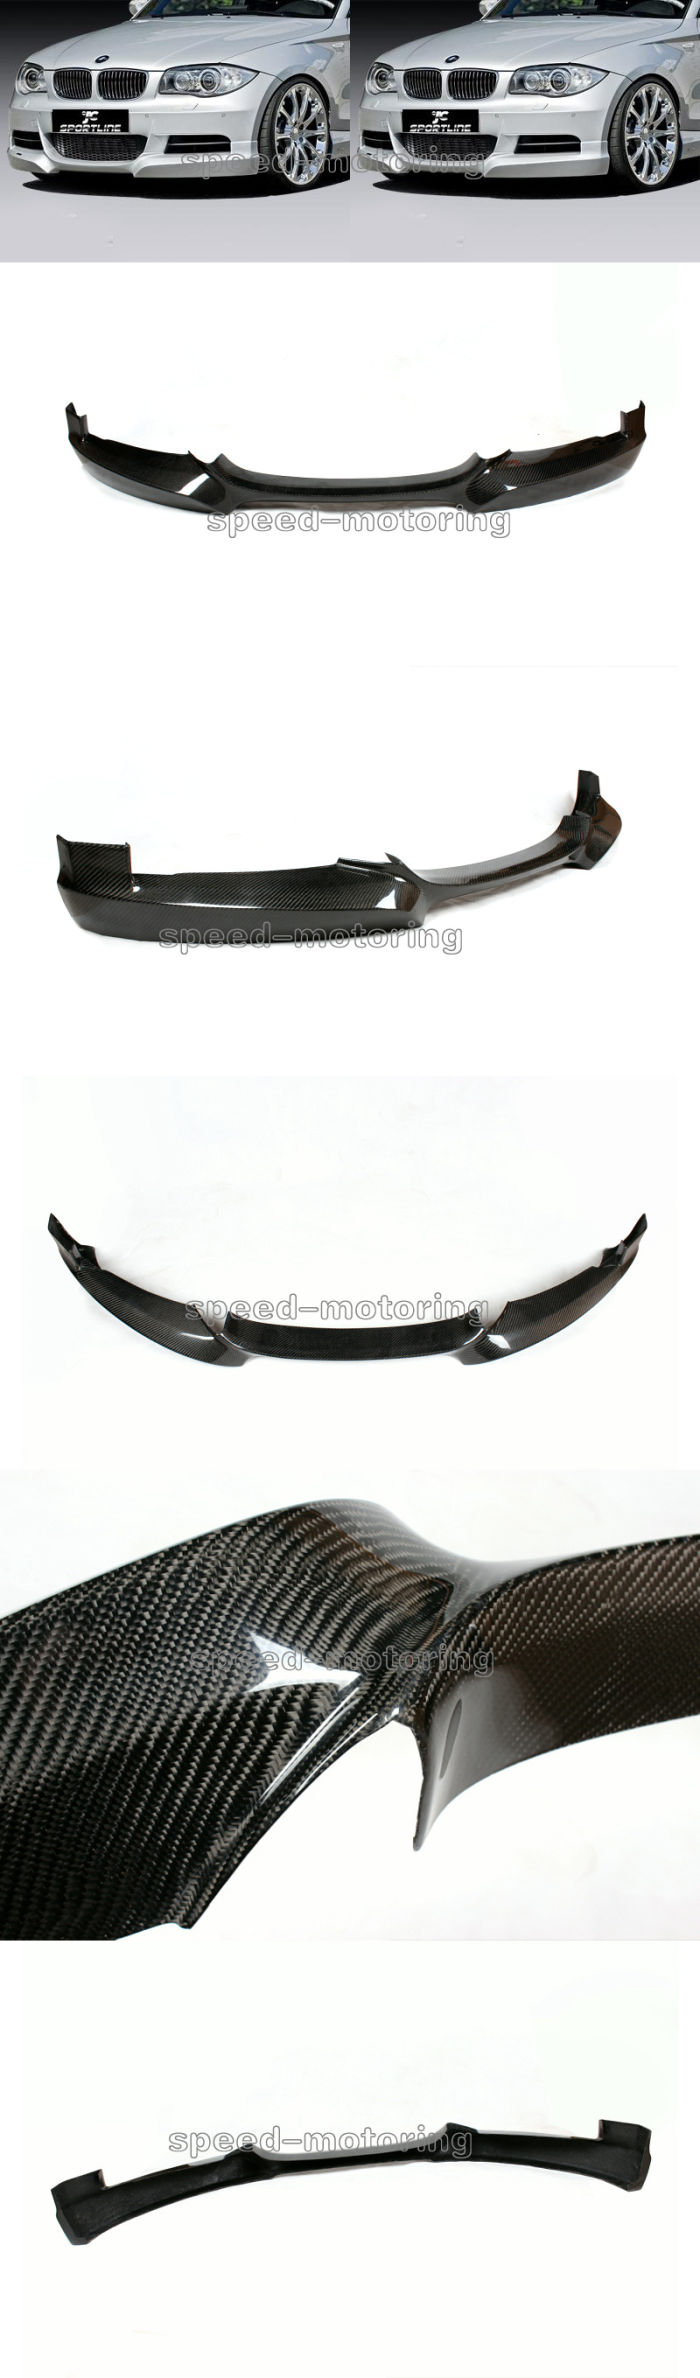 Carbon Fiber Front Lip Splitter Flaps For BMW E82 E88 135i Coupe M-tech Bumper.jpg